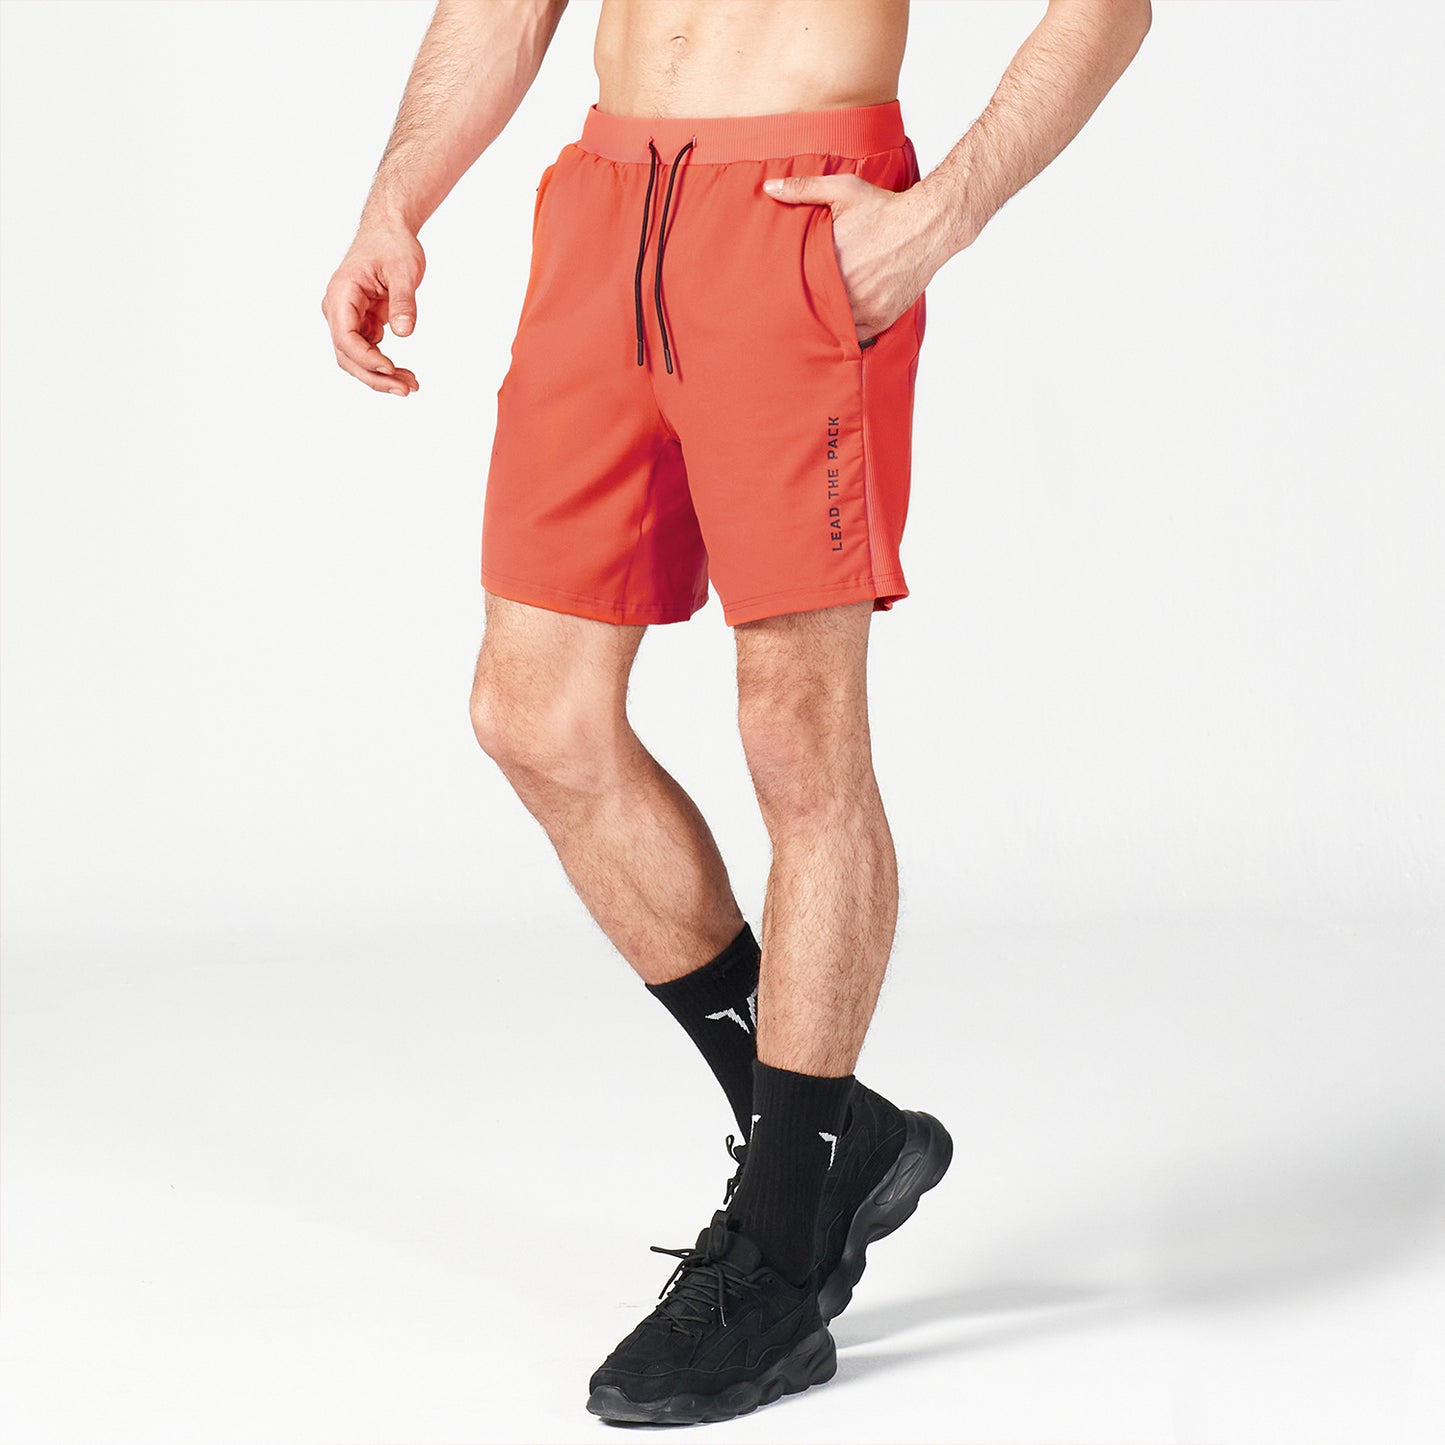 squatwolf-gym-wear-ribbed-flex-shorts-paprika-workout-short-for-men